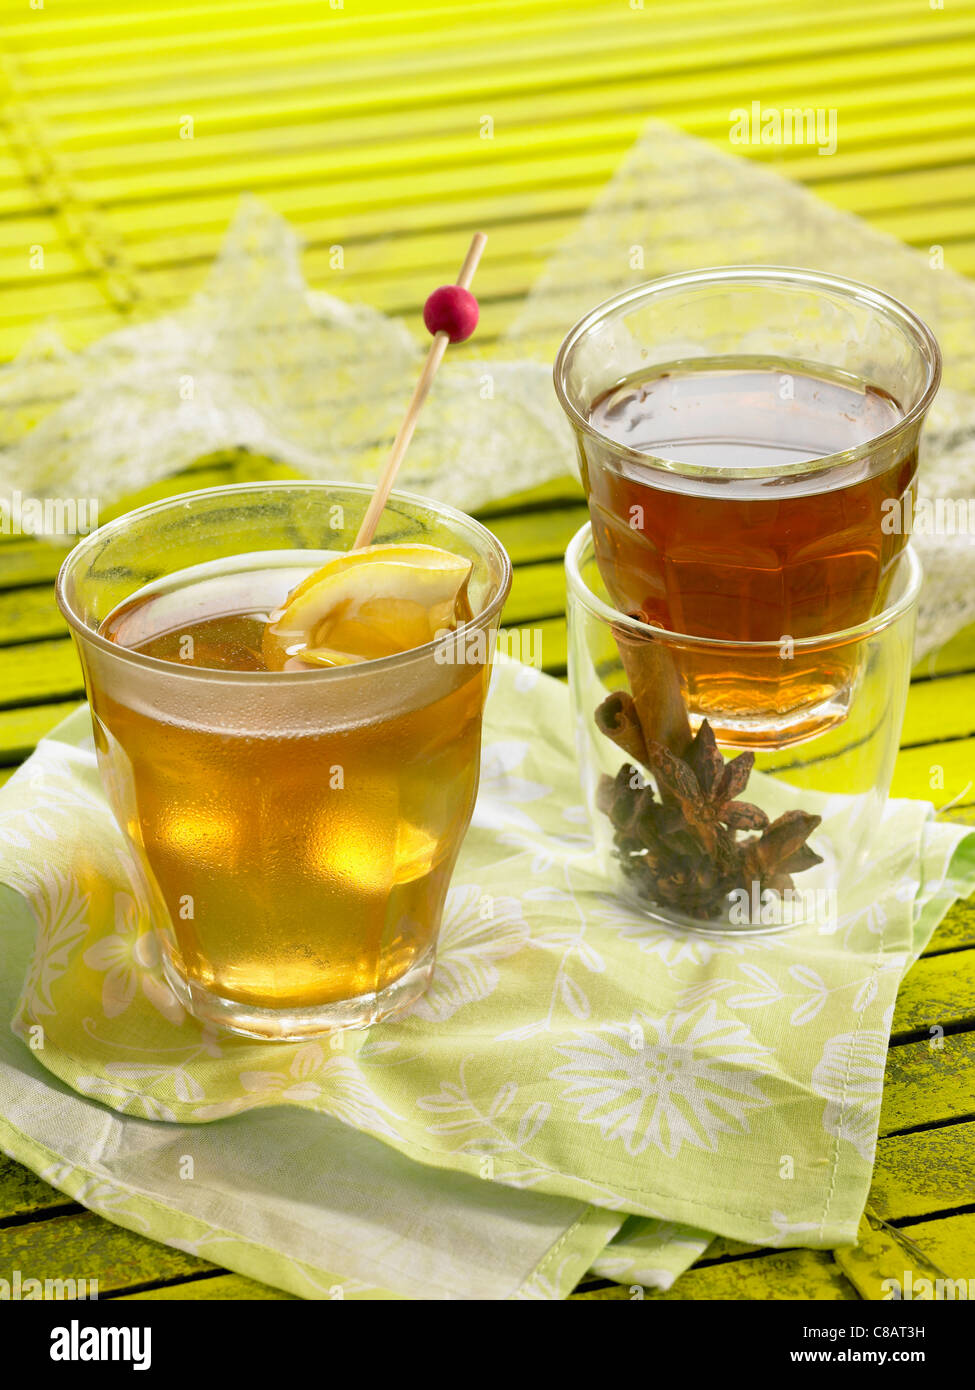 Iced tea and star anise-flavored tea Stock Photo